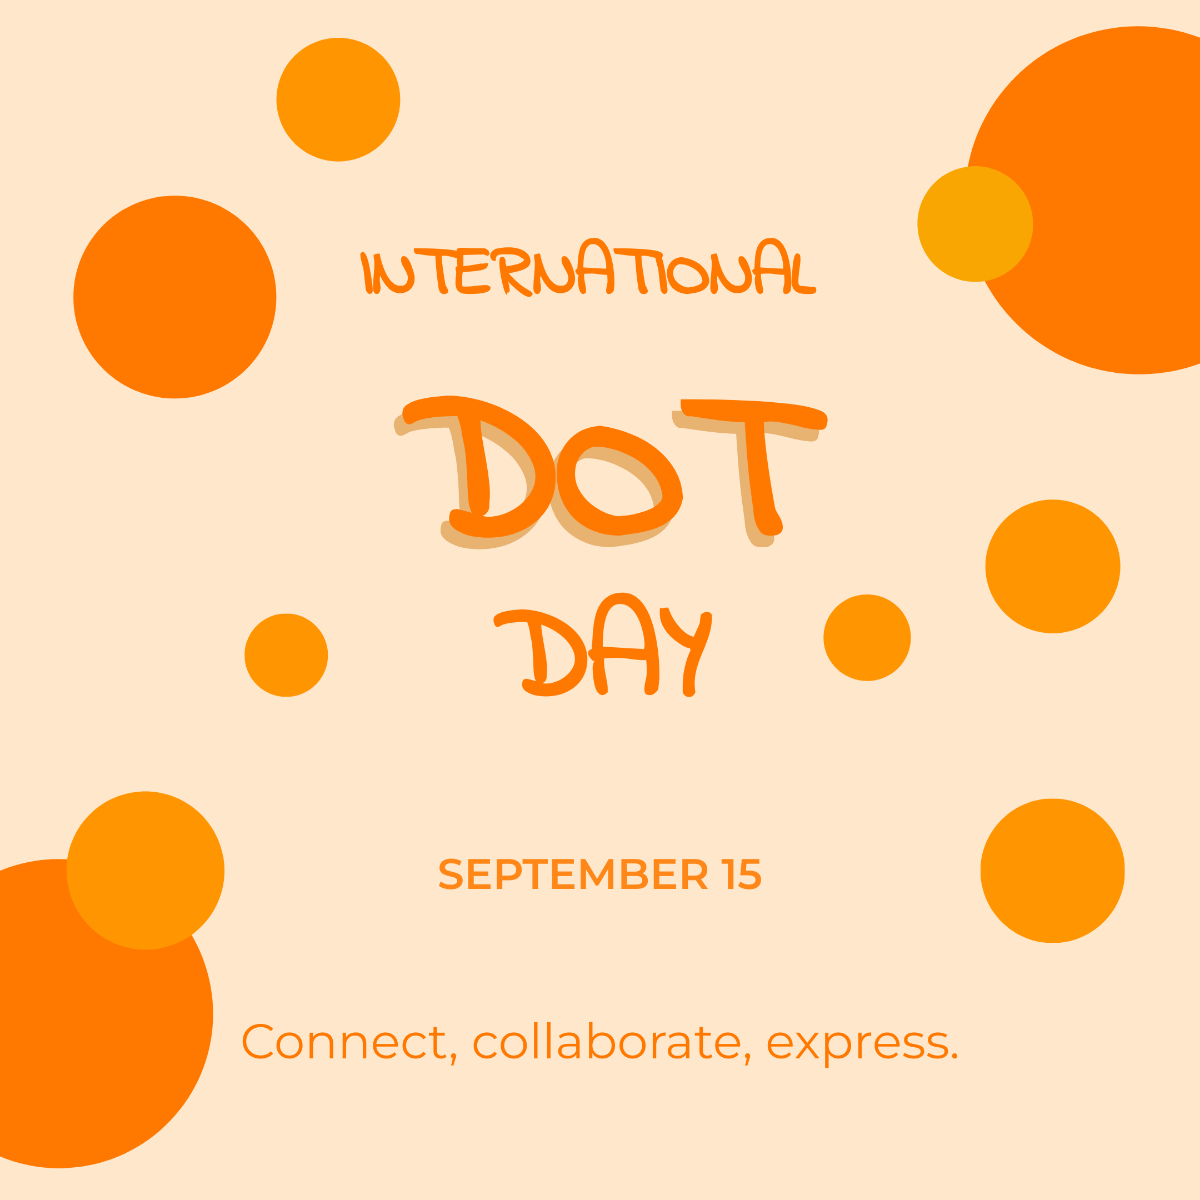 International Dot Day FB Post Template